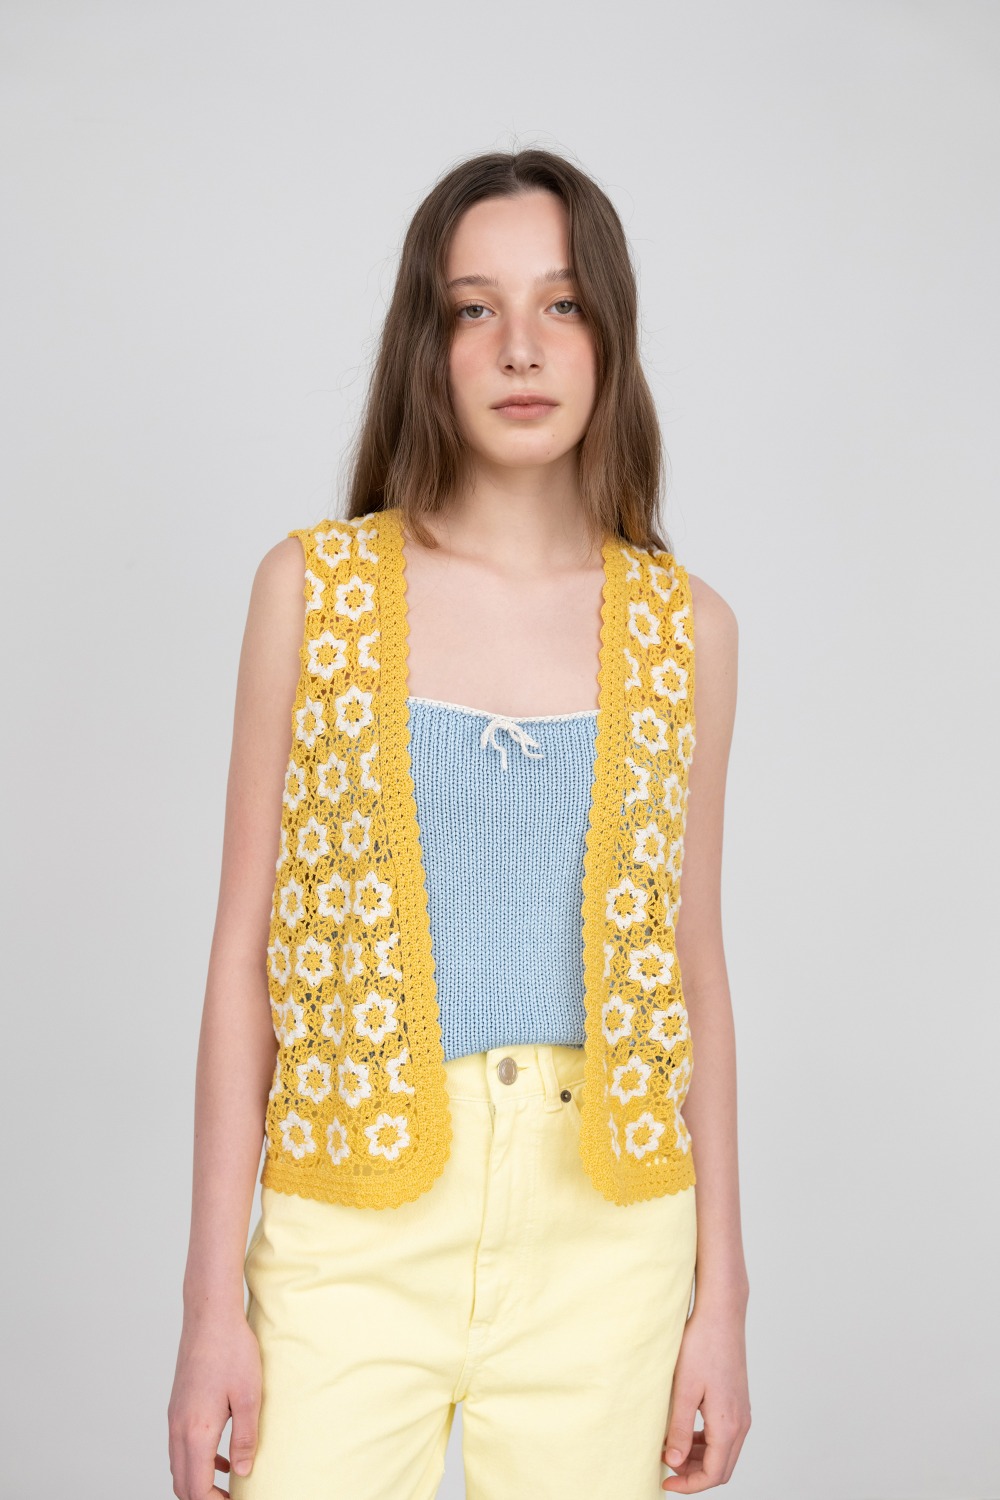 Via Floral handmade knit vest (yellow)